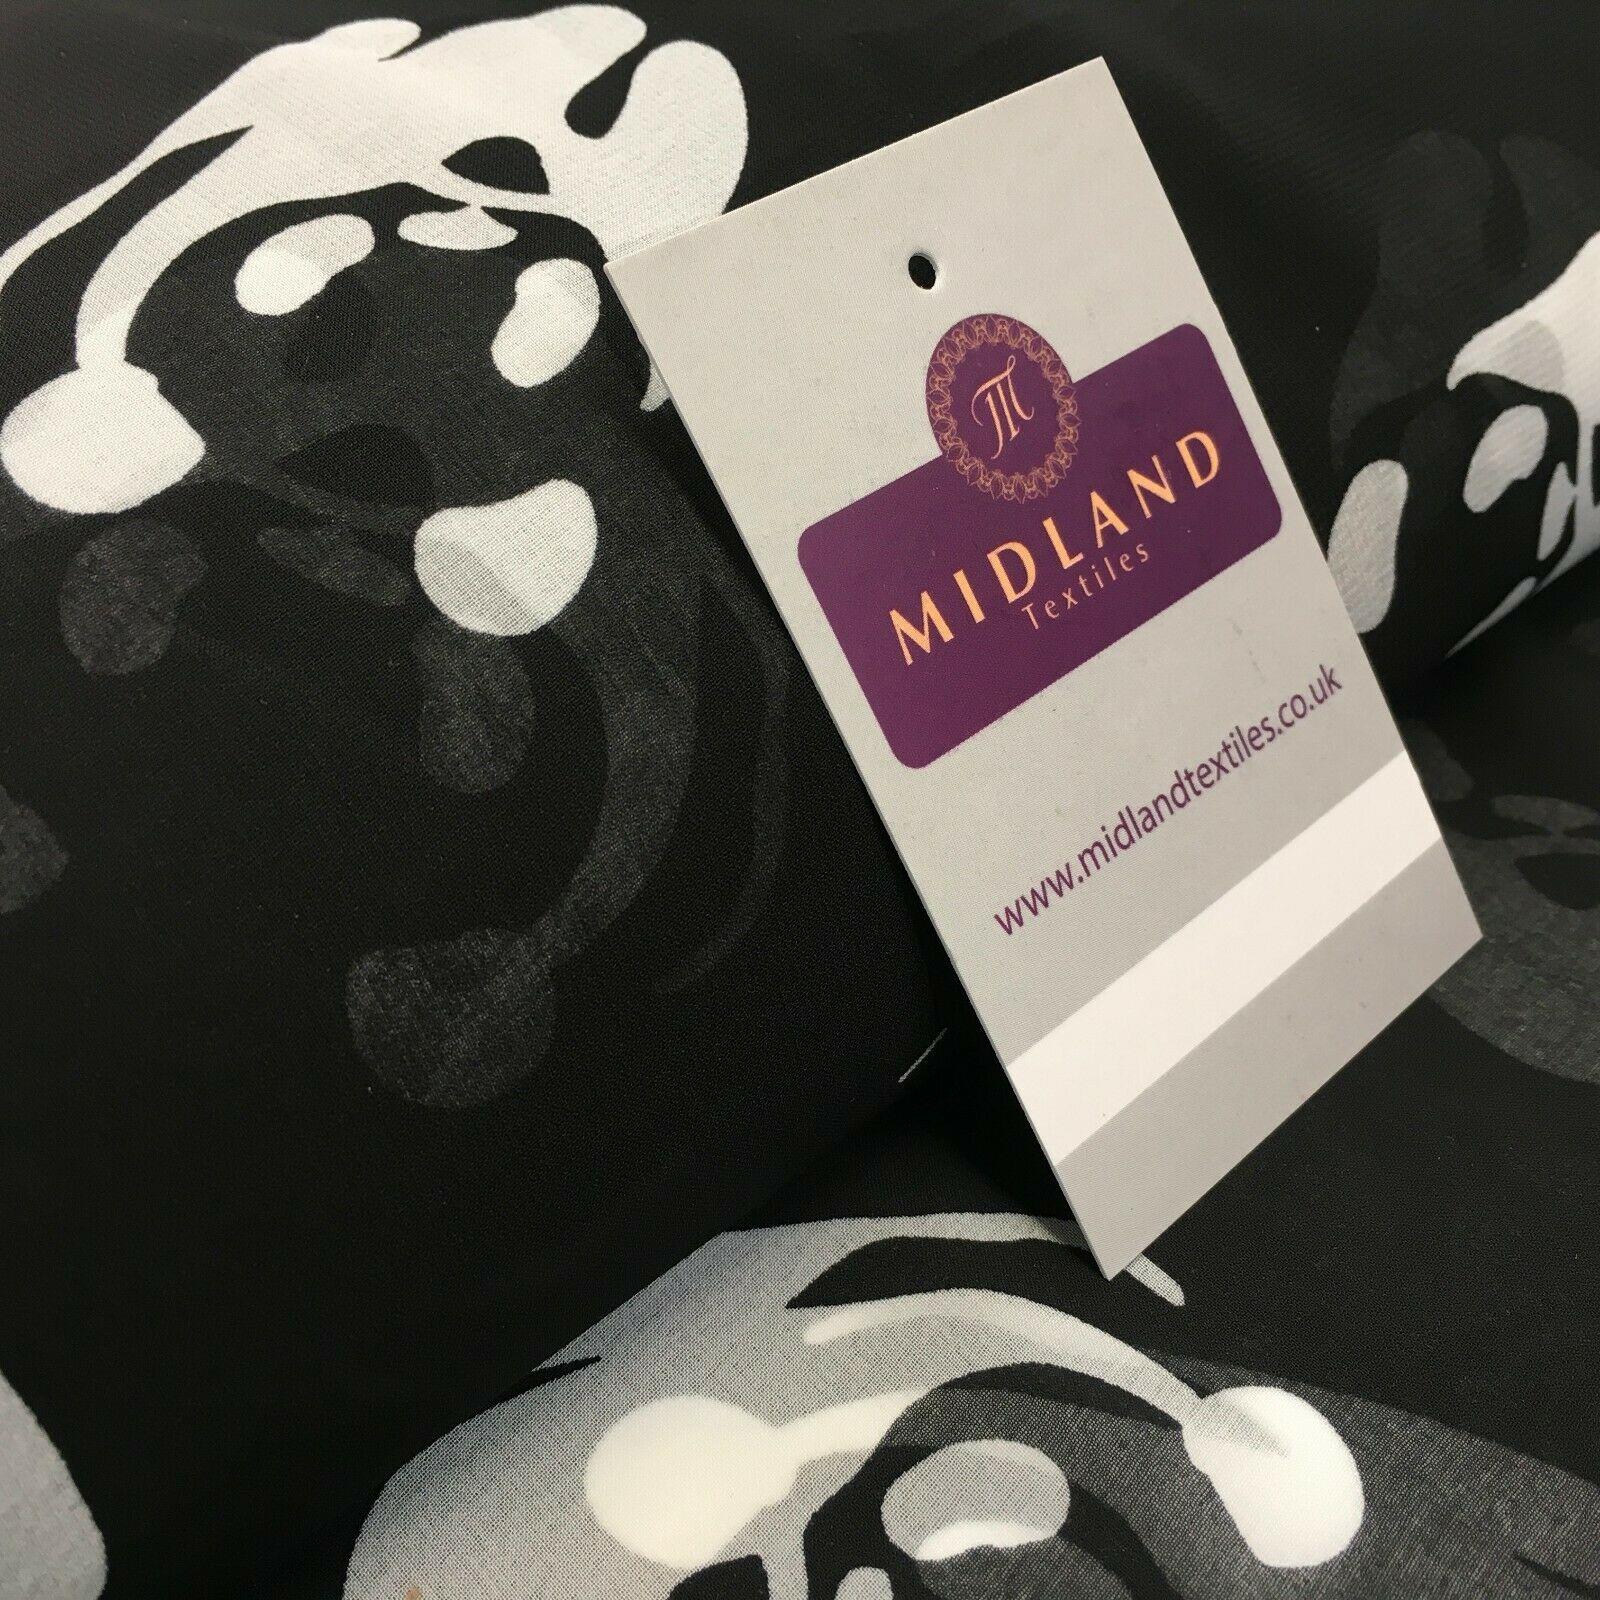 Black and White Panda Silhouette Printed Light Chiffon Fabric 150 cm MK1084-8